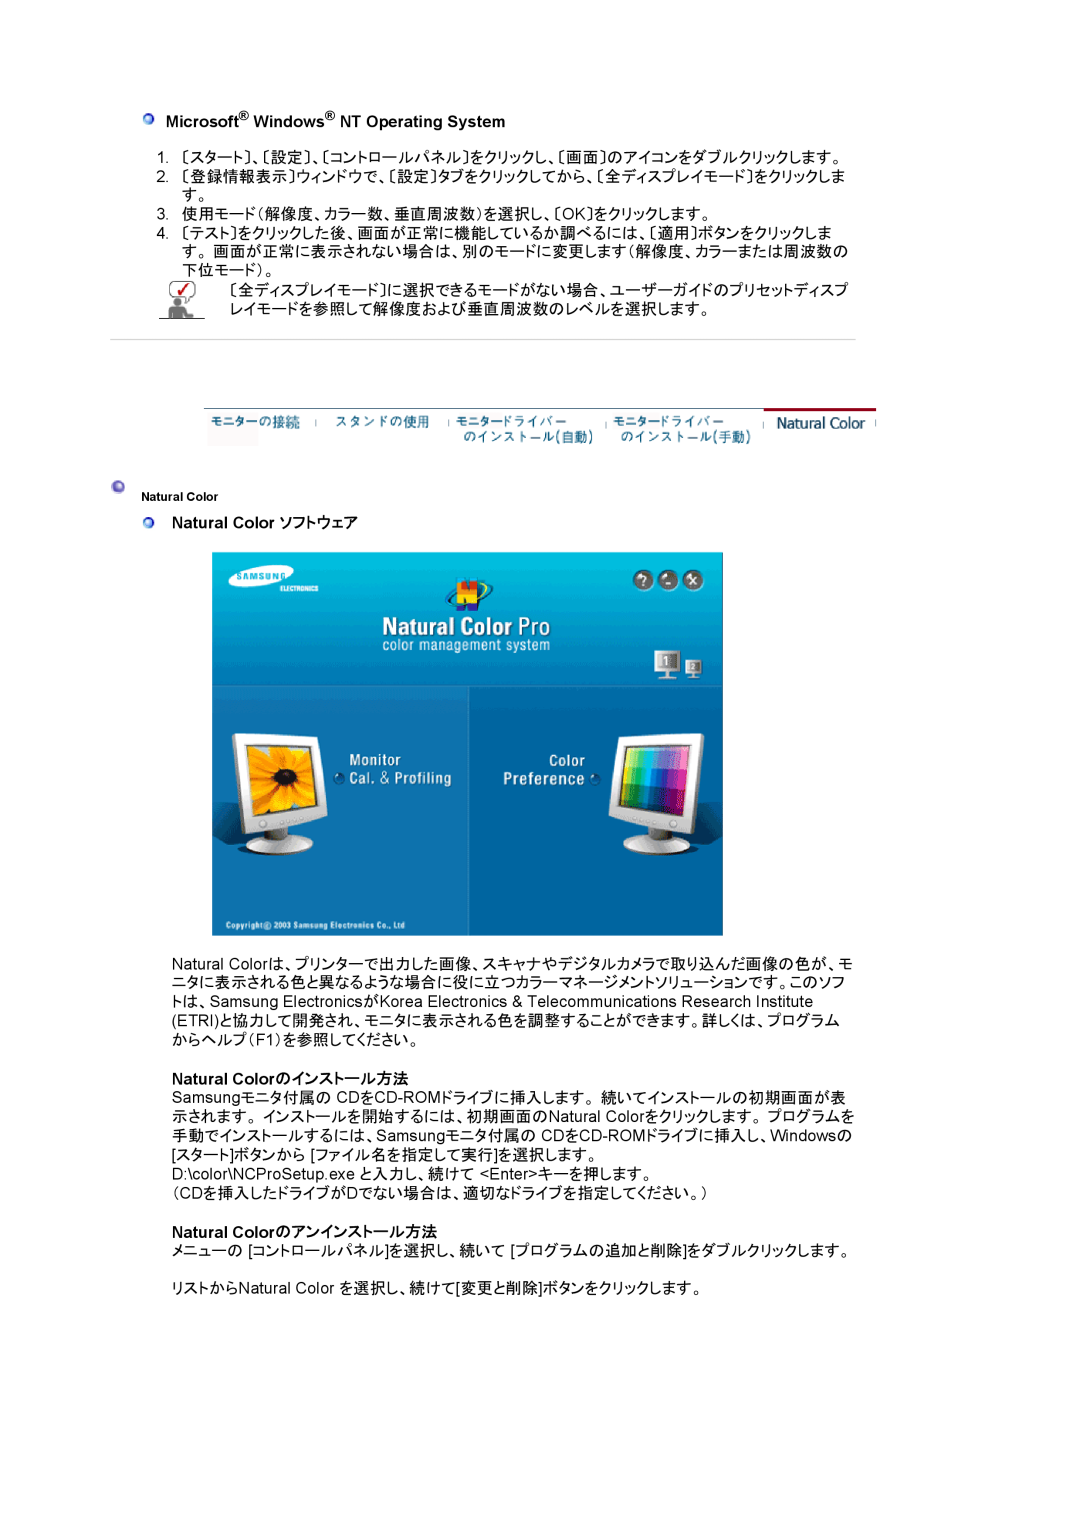 Samsung LS19HAXKNV/XSJ, LS19HAXKBH/XSJ Microsoft Windows NT Operating System, Natural Color ソフトウェア, Natural Colorのインストール方法 